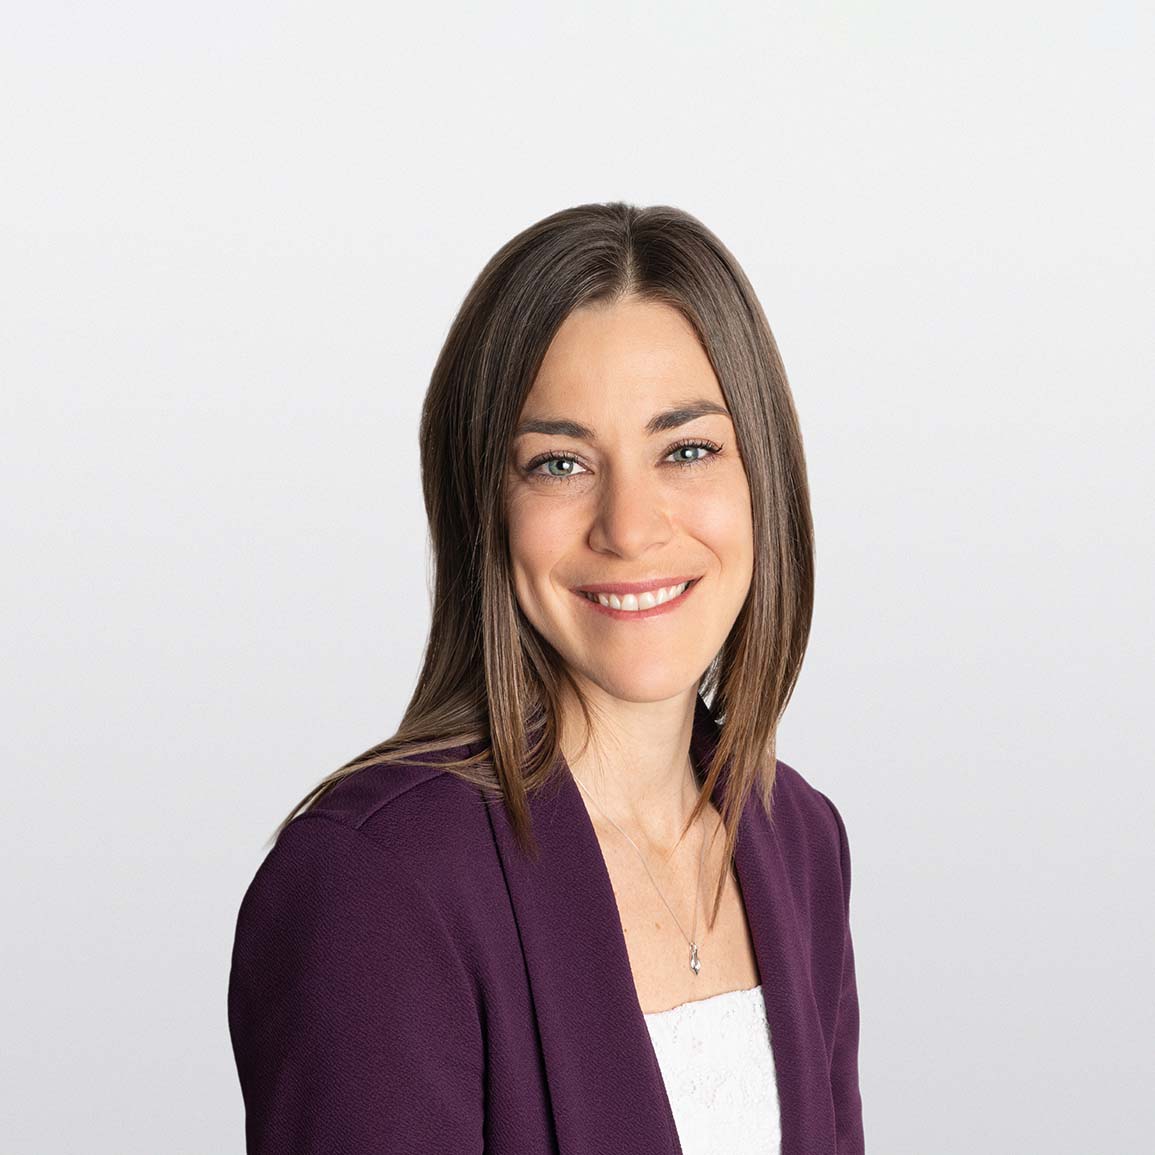 Image of Sylvie Coxen, Financial Advisor, on white background